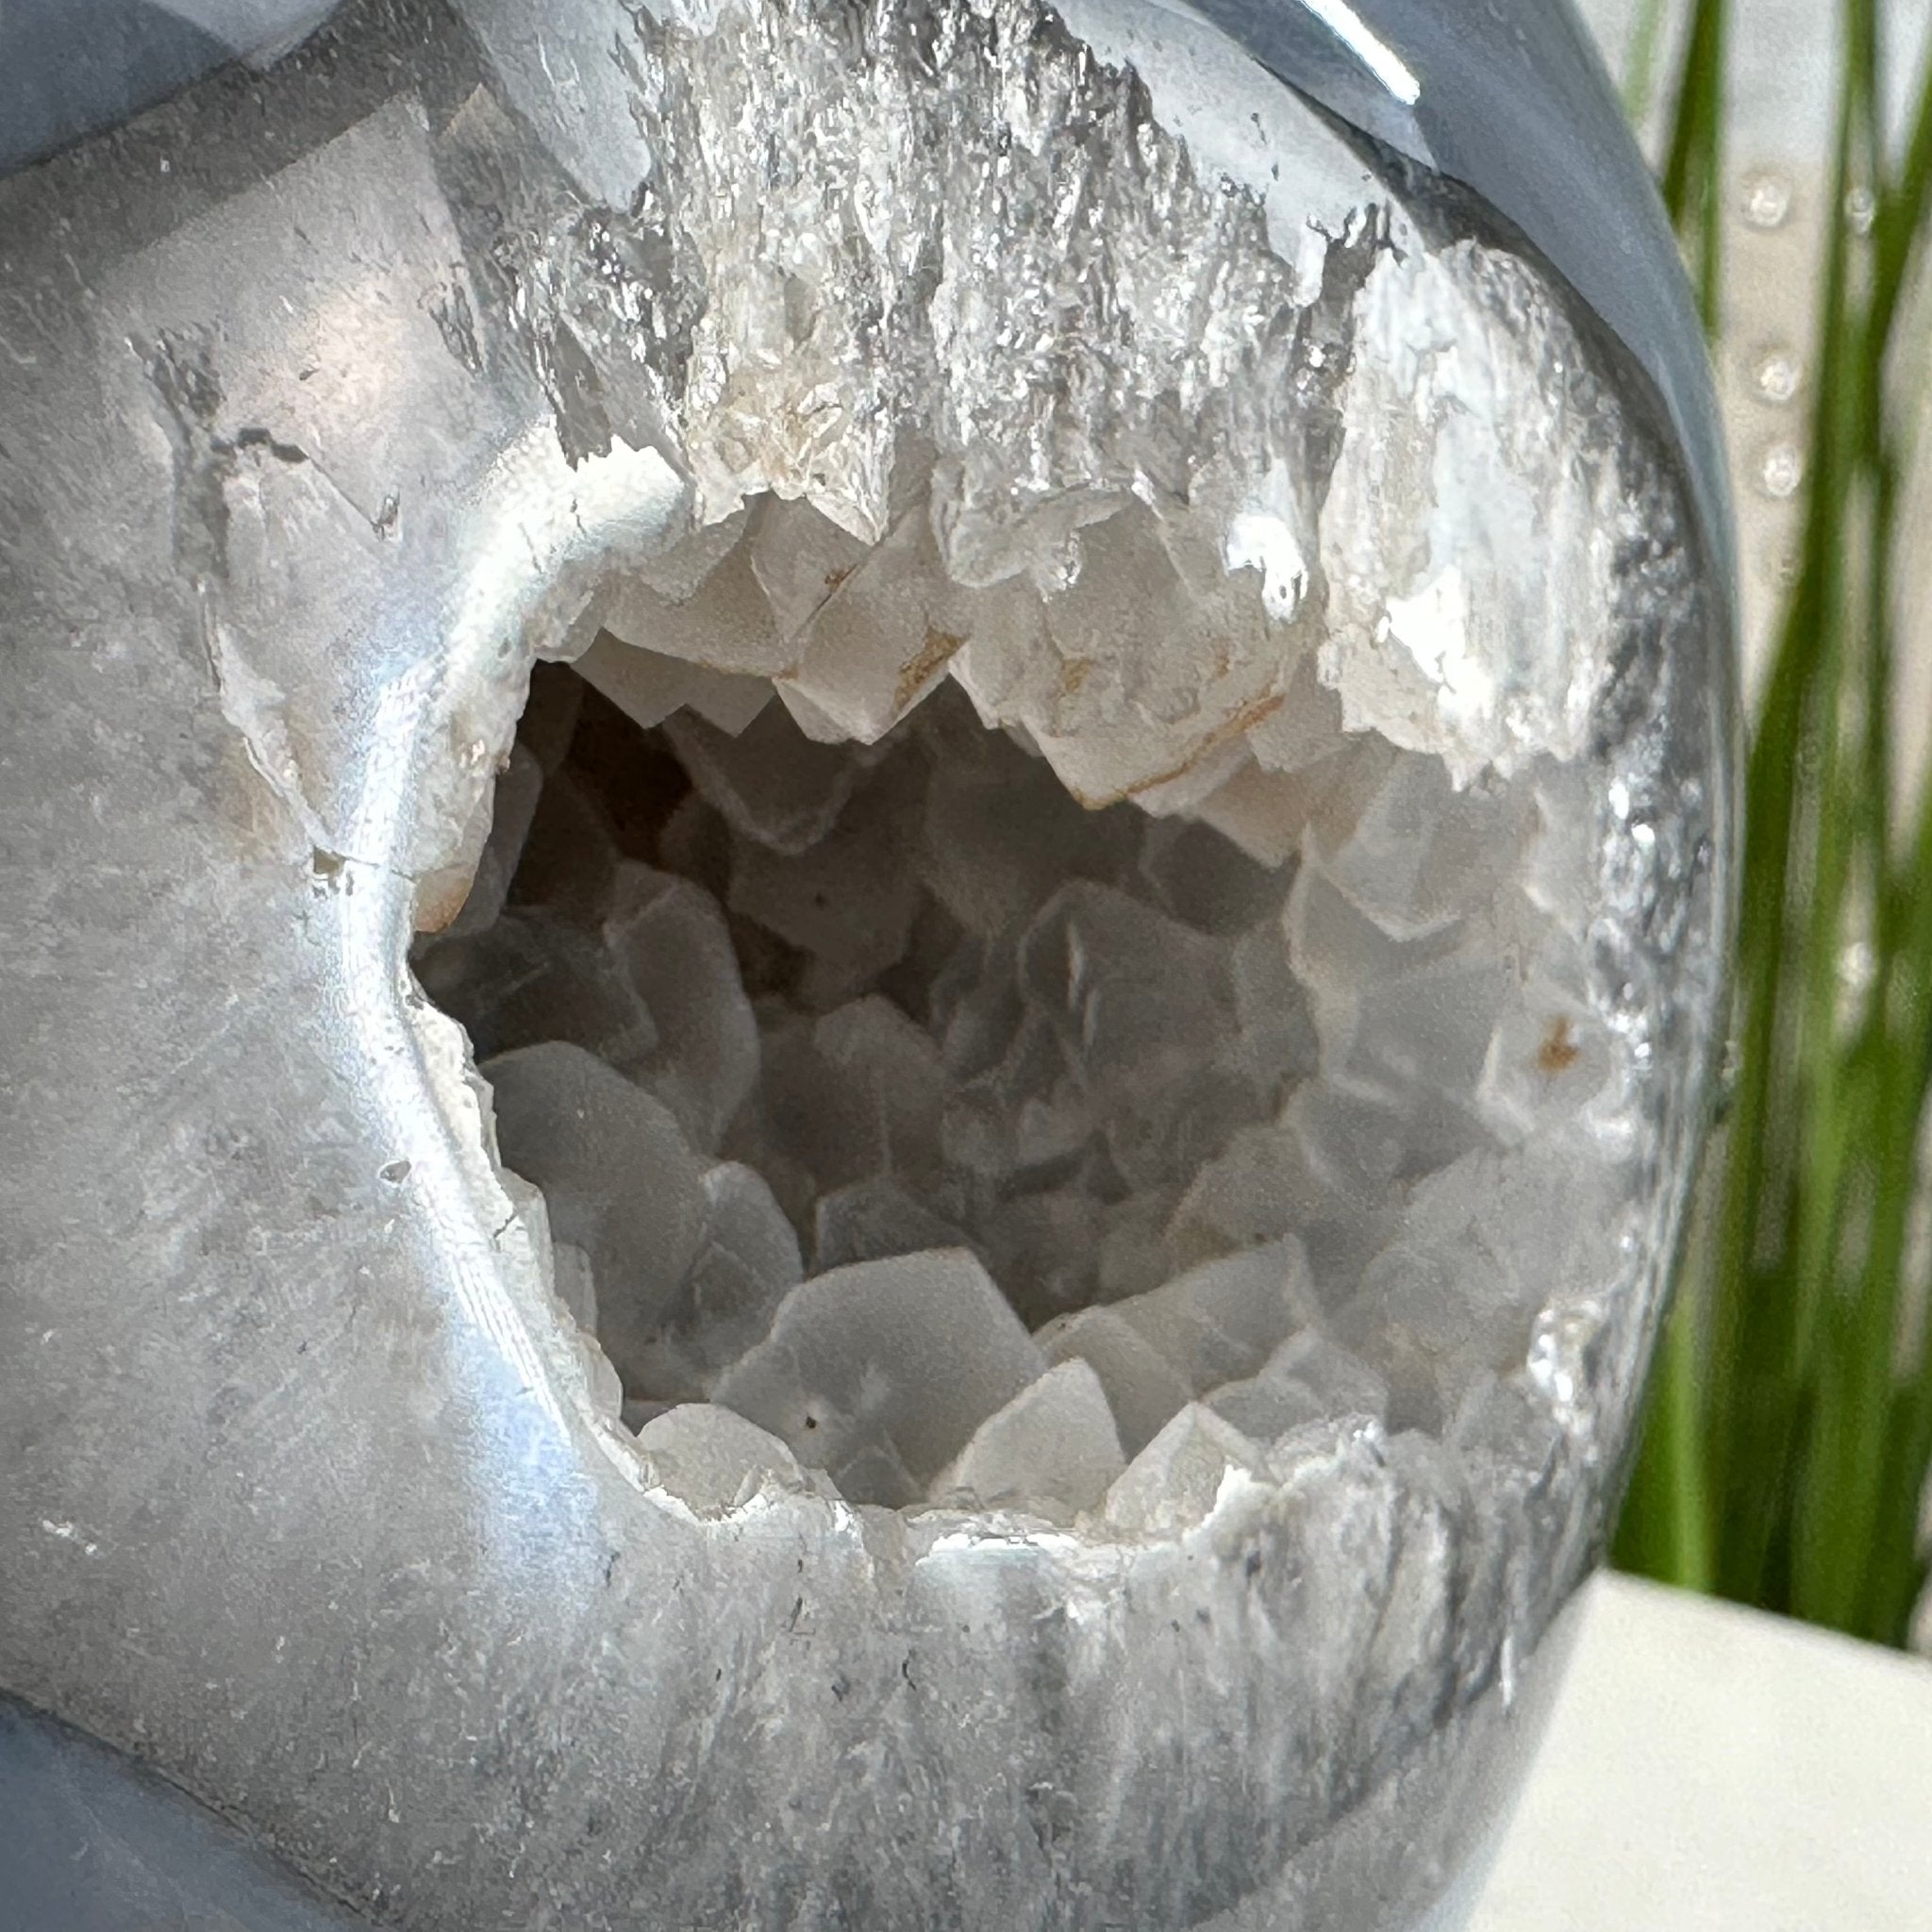 Polished Agate Heart Geode on a Metal Stand, 2.4 lbs & 5.2" Tall, Model #5468-0062 by Brazil Gems - Brazil GemsBrazil GemsPolished Agate Heart Geode on a Metal Stand, 2.4 lbs & 5.2" Tall, Model #5468-0062 by Brazil GemsHearts5468-0062